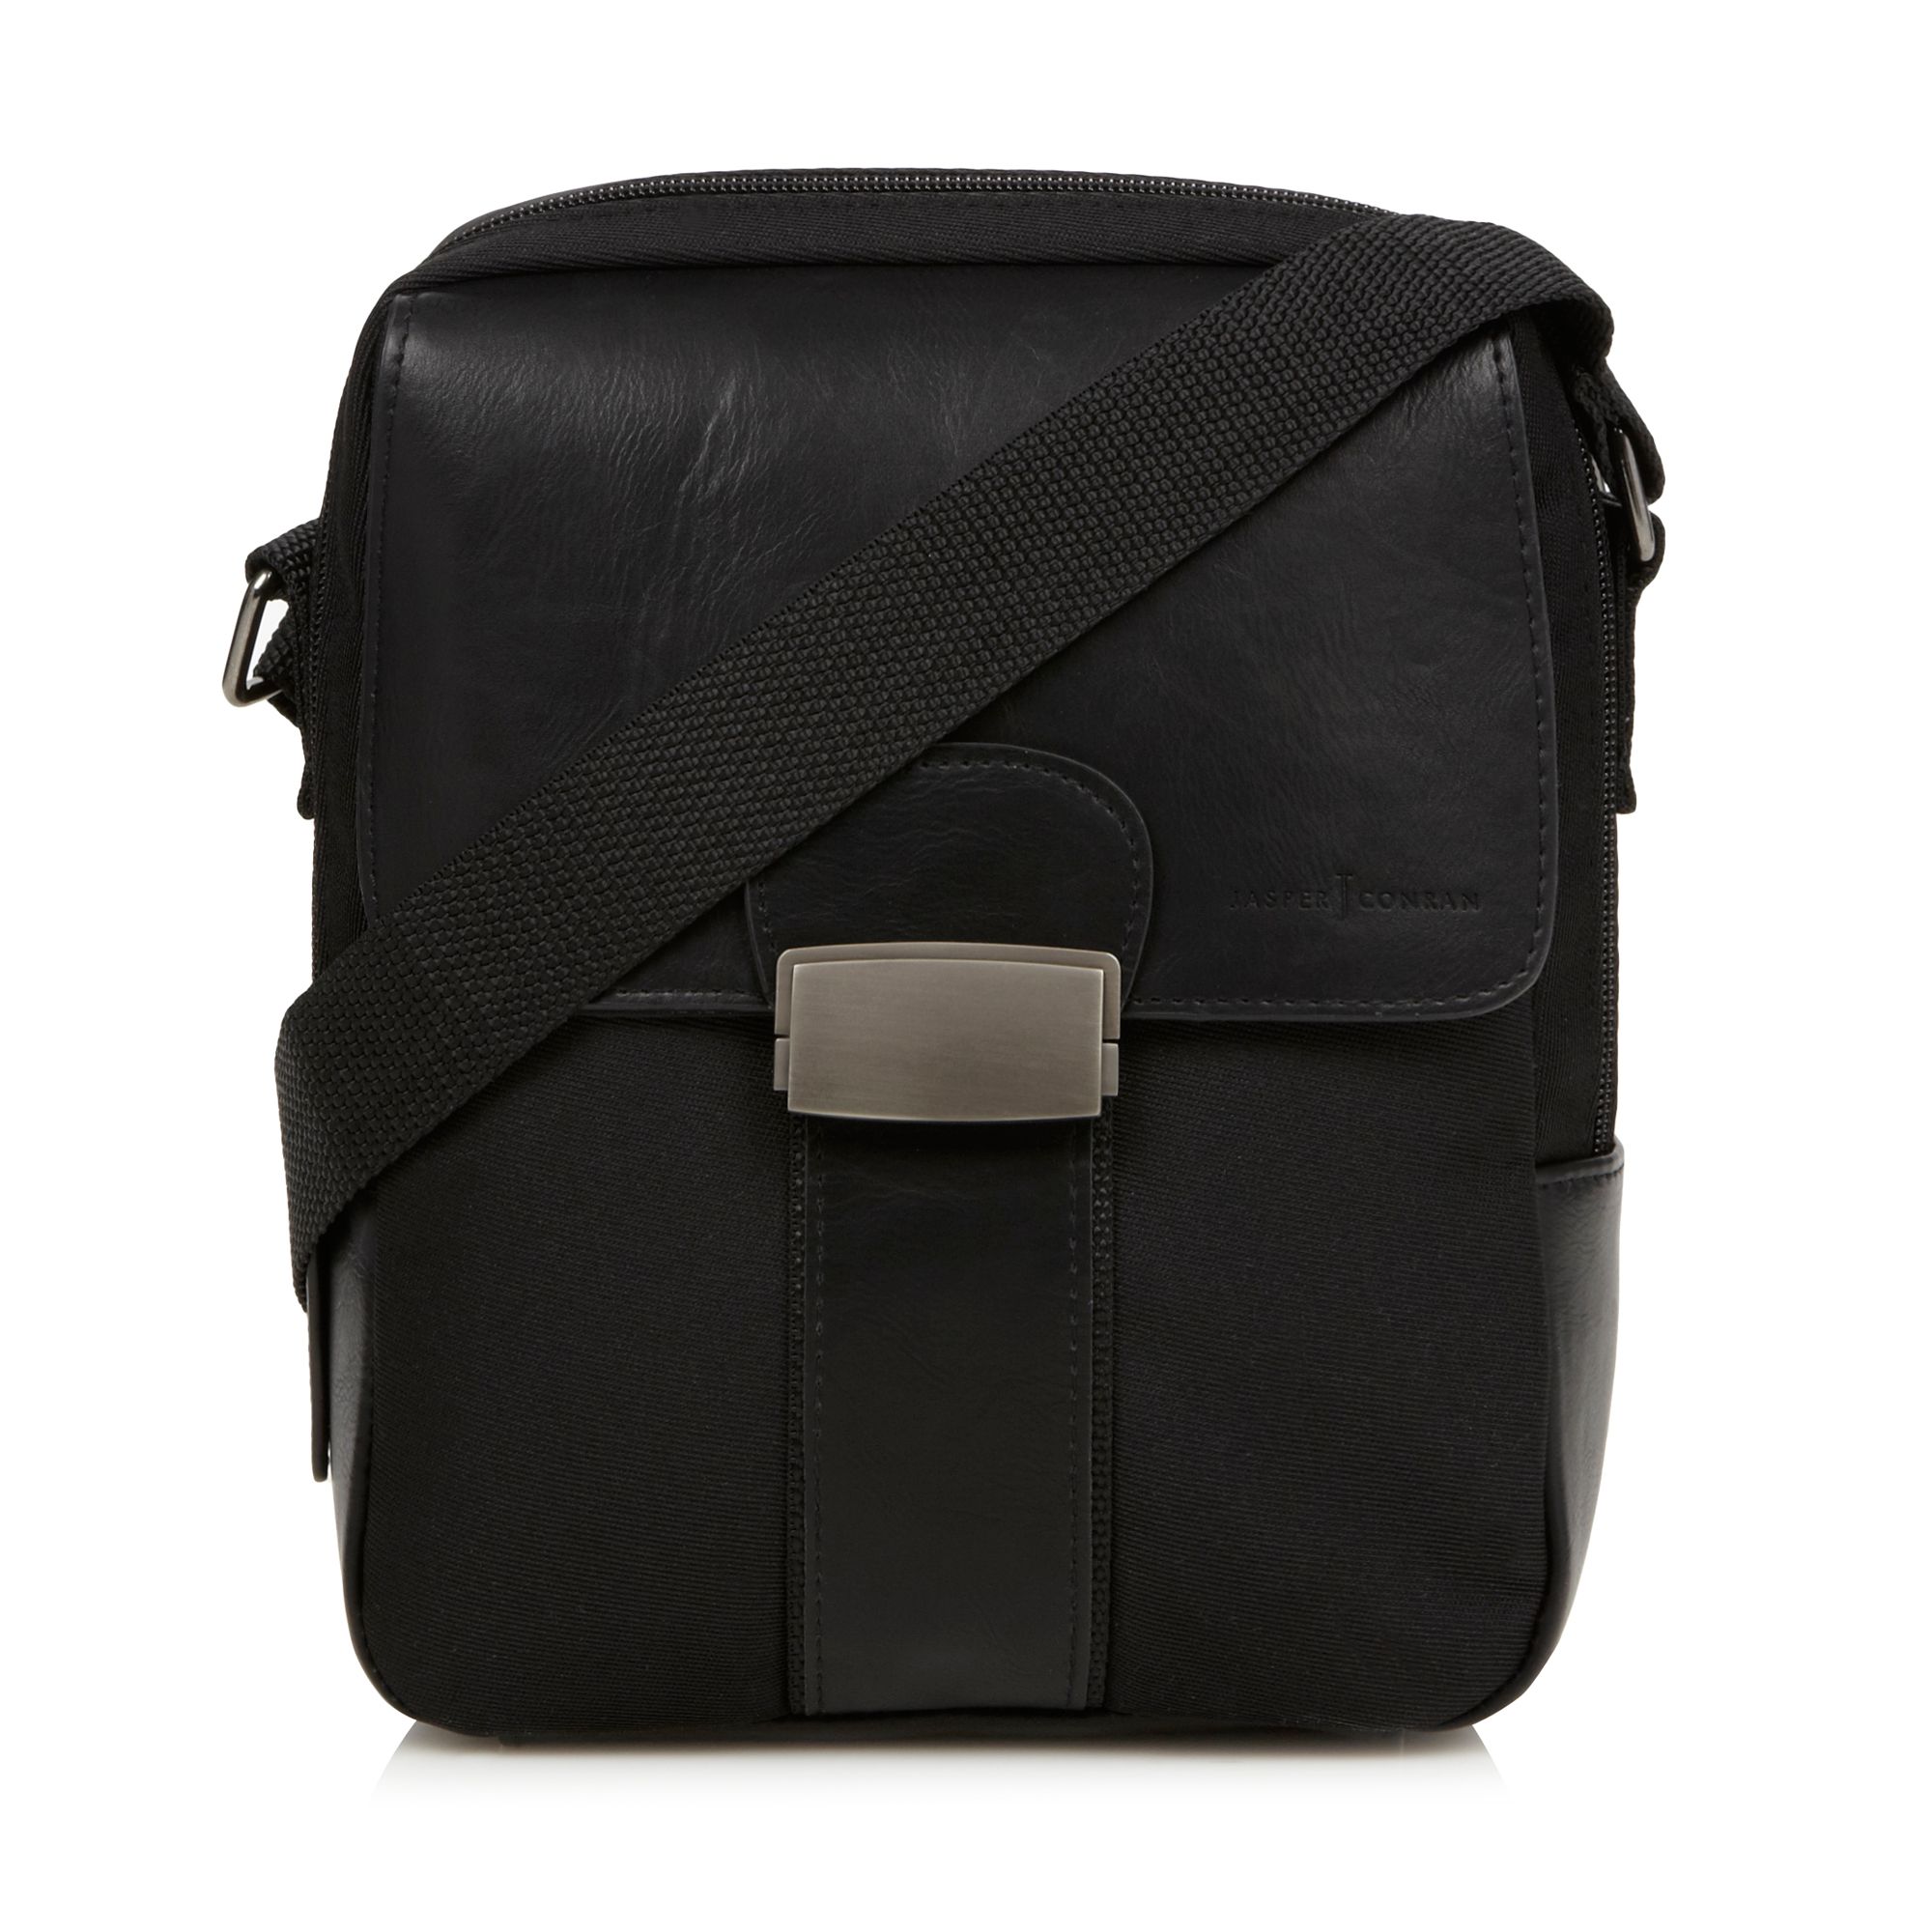 J By Jasper Conran Mens Designer Black Zip Top Cross Body Bag From Debenhams | eBay